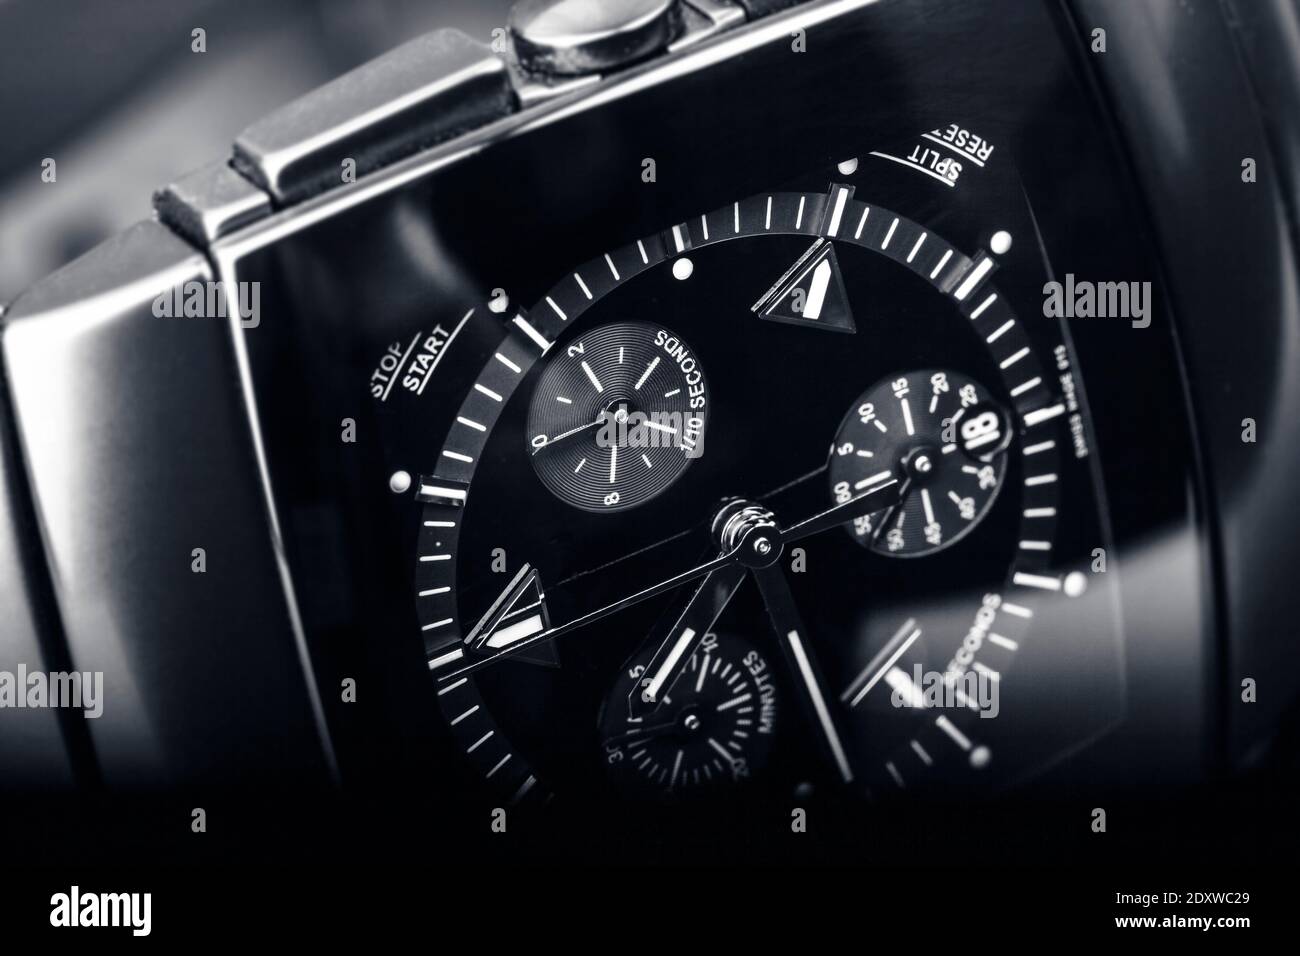 Luxuriöse Armbanduhr mit quadratischem Korpus aus schwarzer glänzender Keramik. Nahaufnahme mit selektivem Fokus Stockfoto